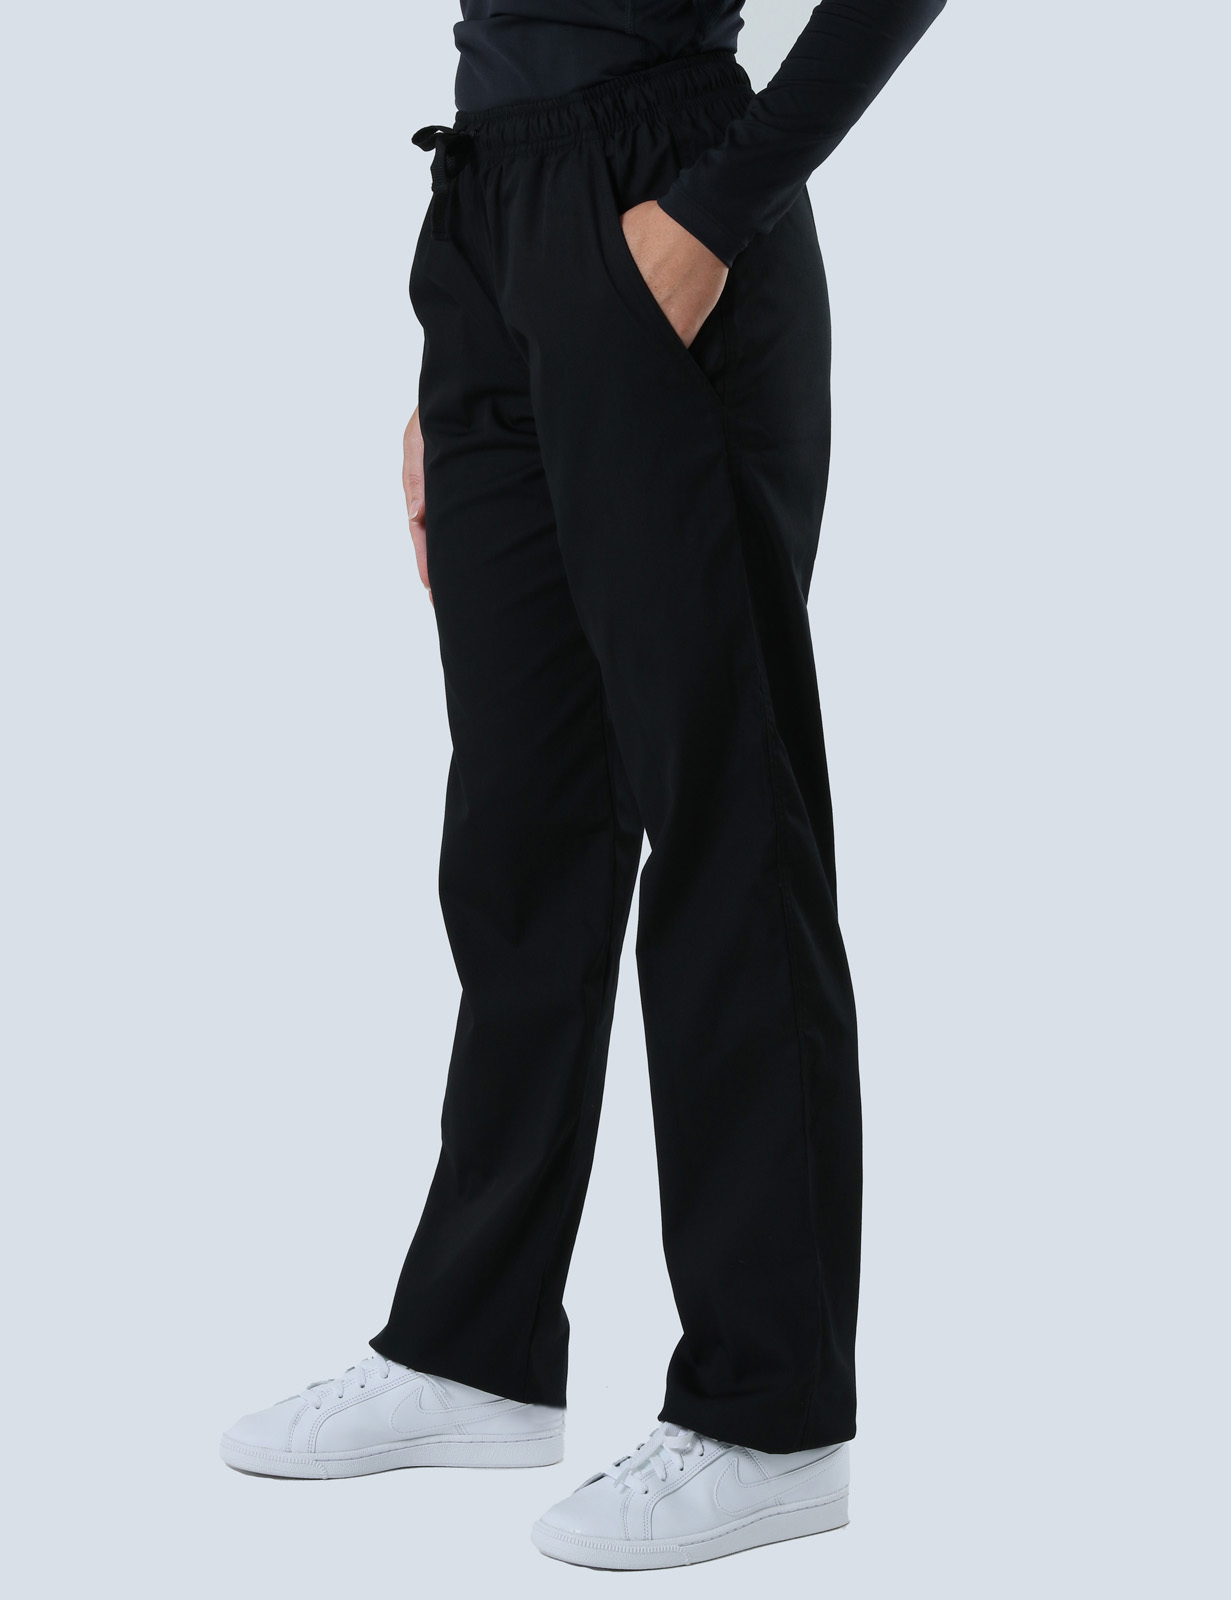 Women's Regular Cut Pants - Black - 3X Large - 0